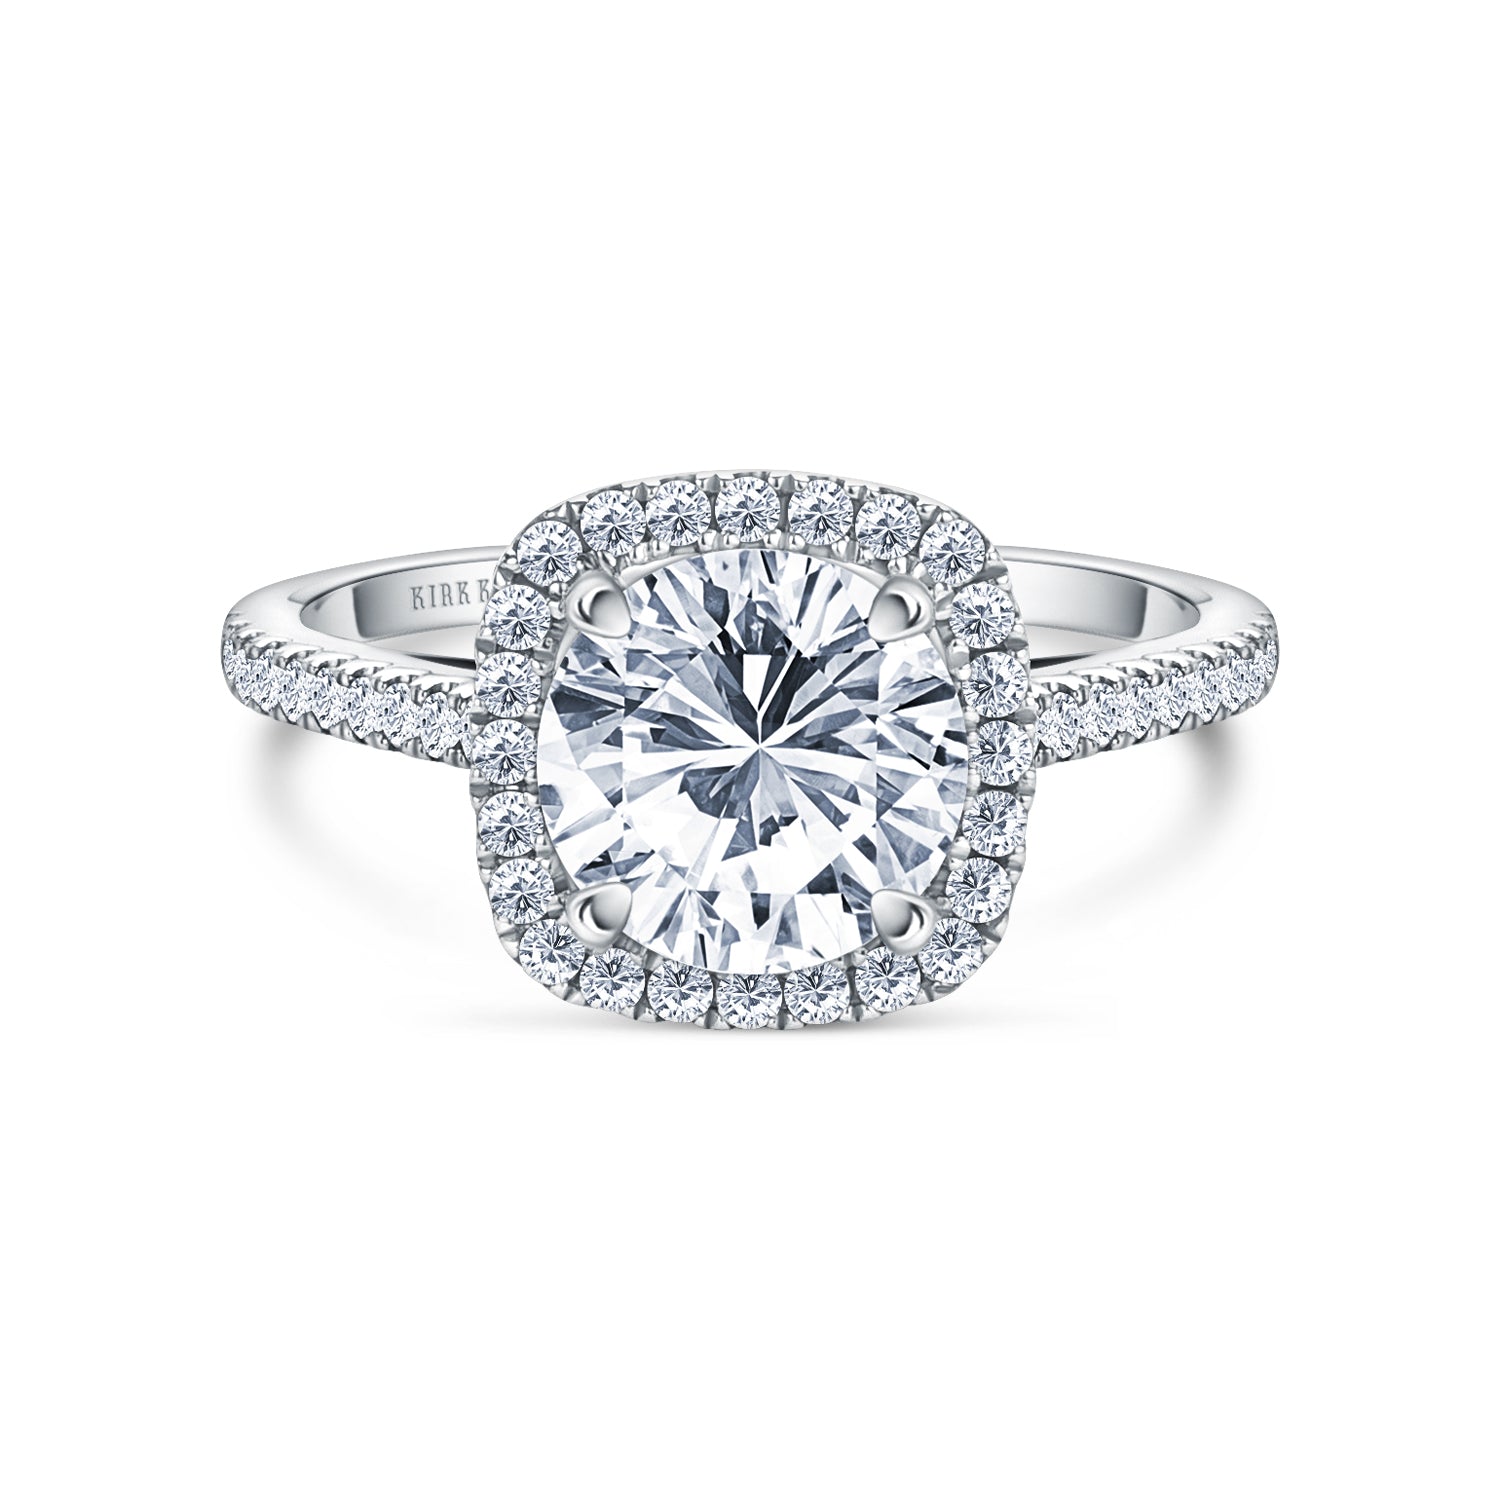 2.25 Carat Oval Cut Diamond Vintage Halo Engagement Ring 14K Rose Gold  Enhanced | eBay